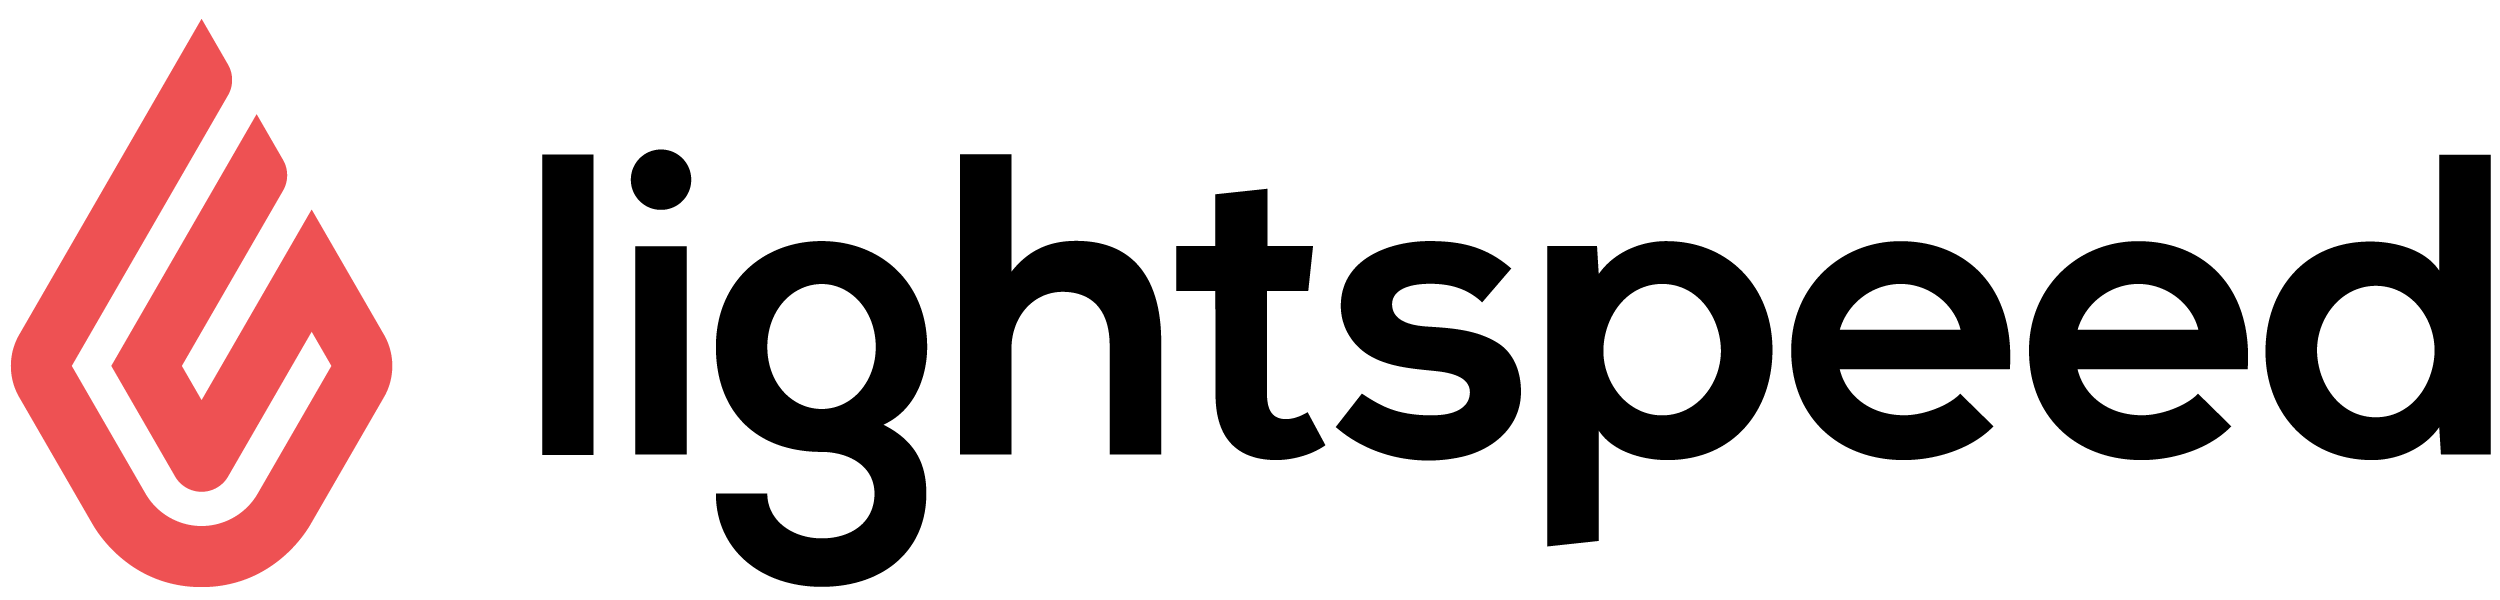 Lightspeed logo-1